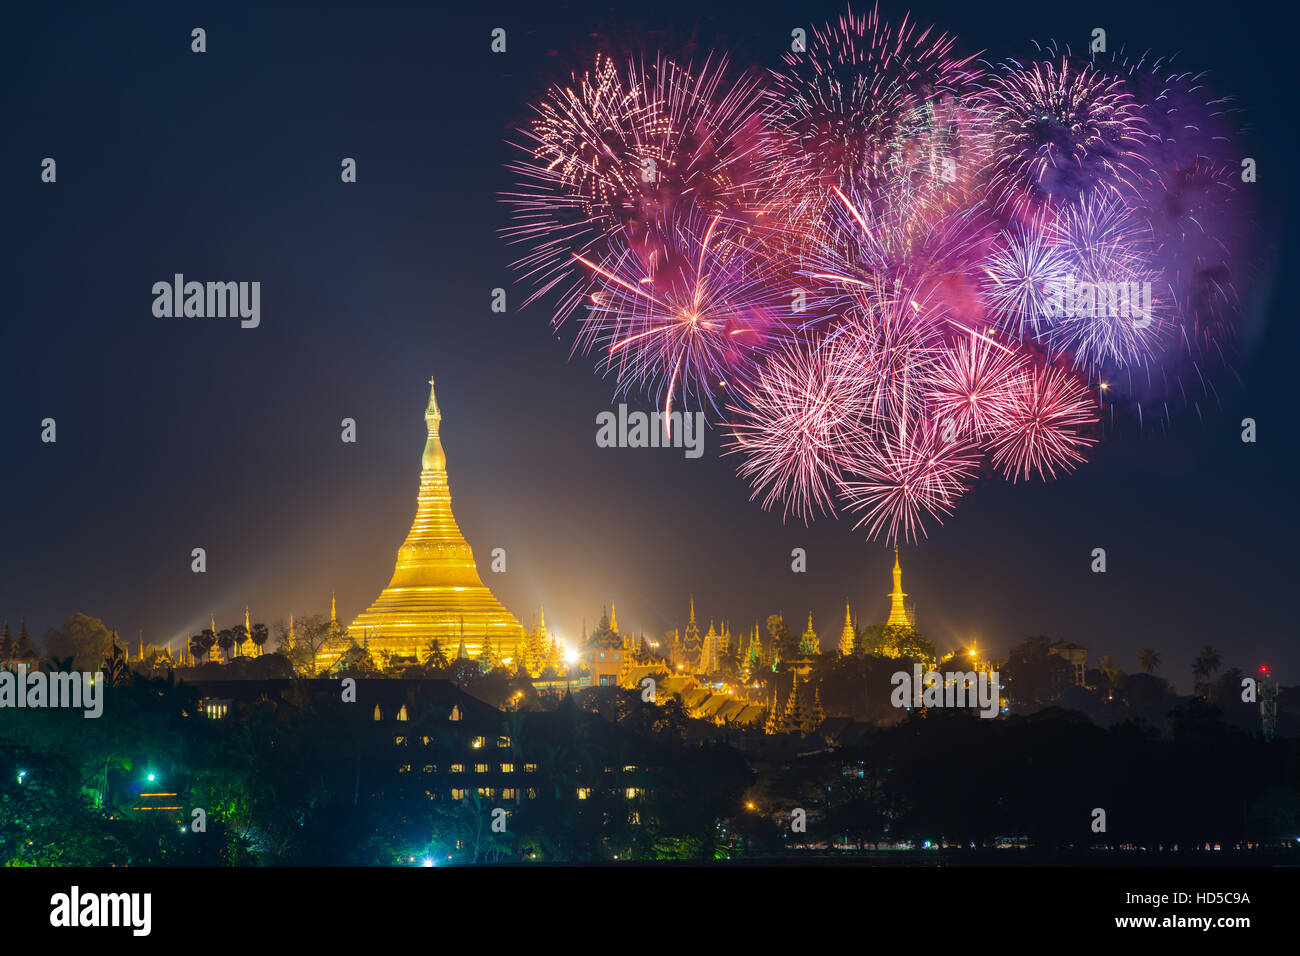 Shwedagon pagoda with with Fireworks celebration New year day 2017 in Yangon, Myanmar Stock Photo